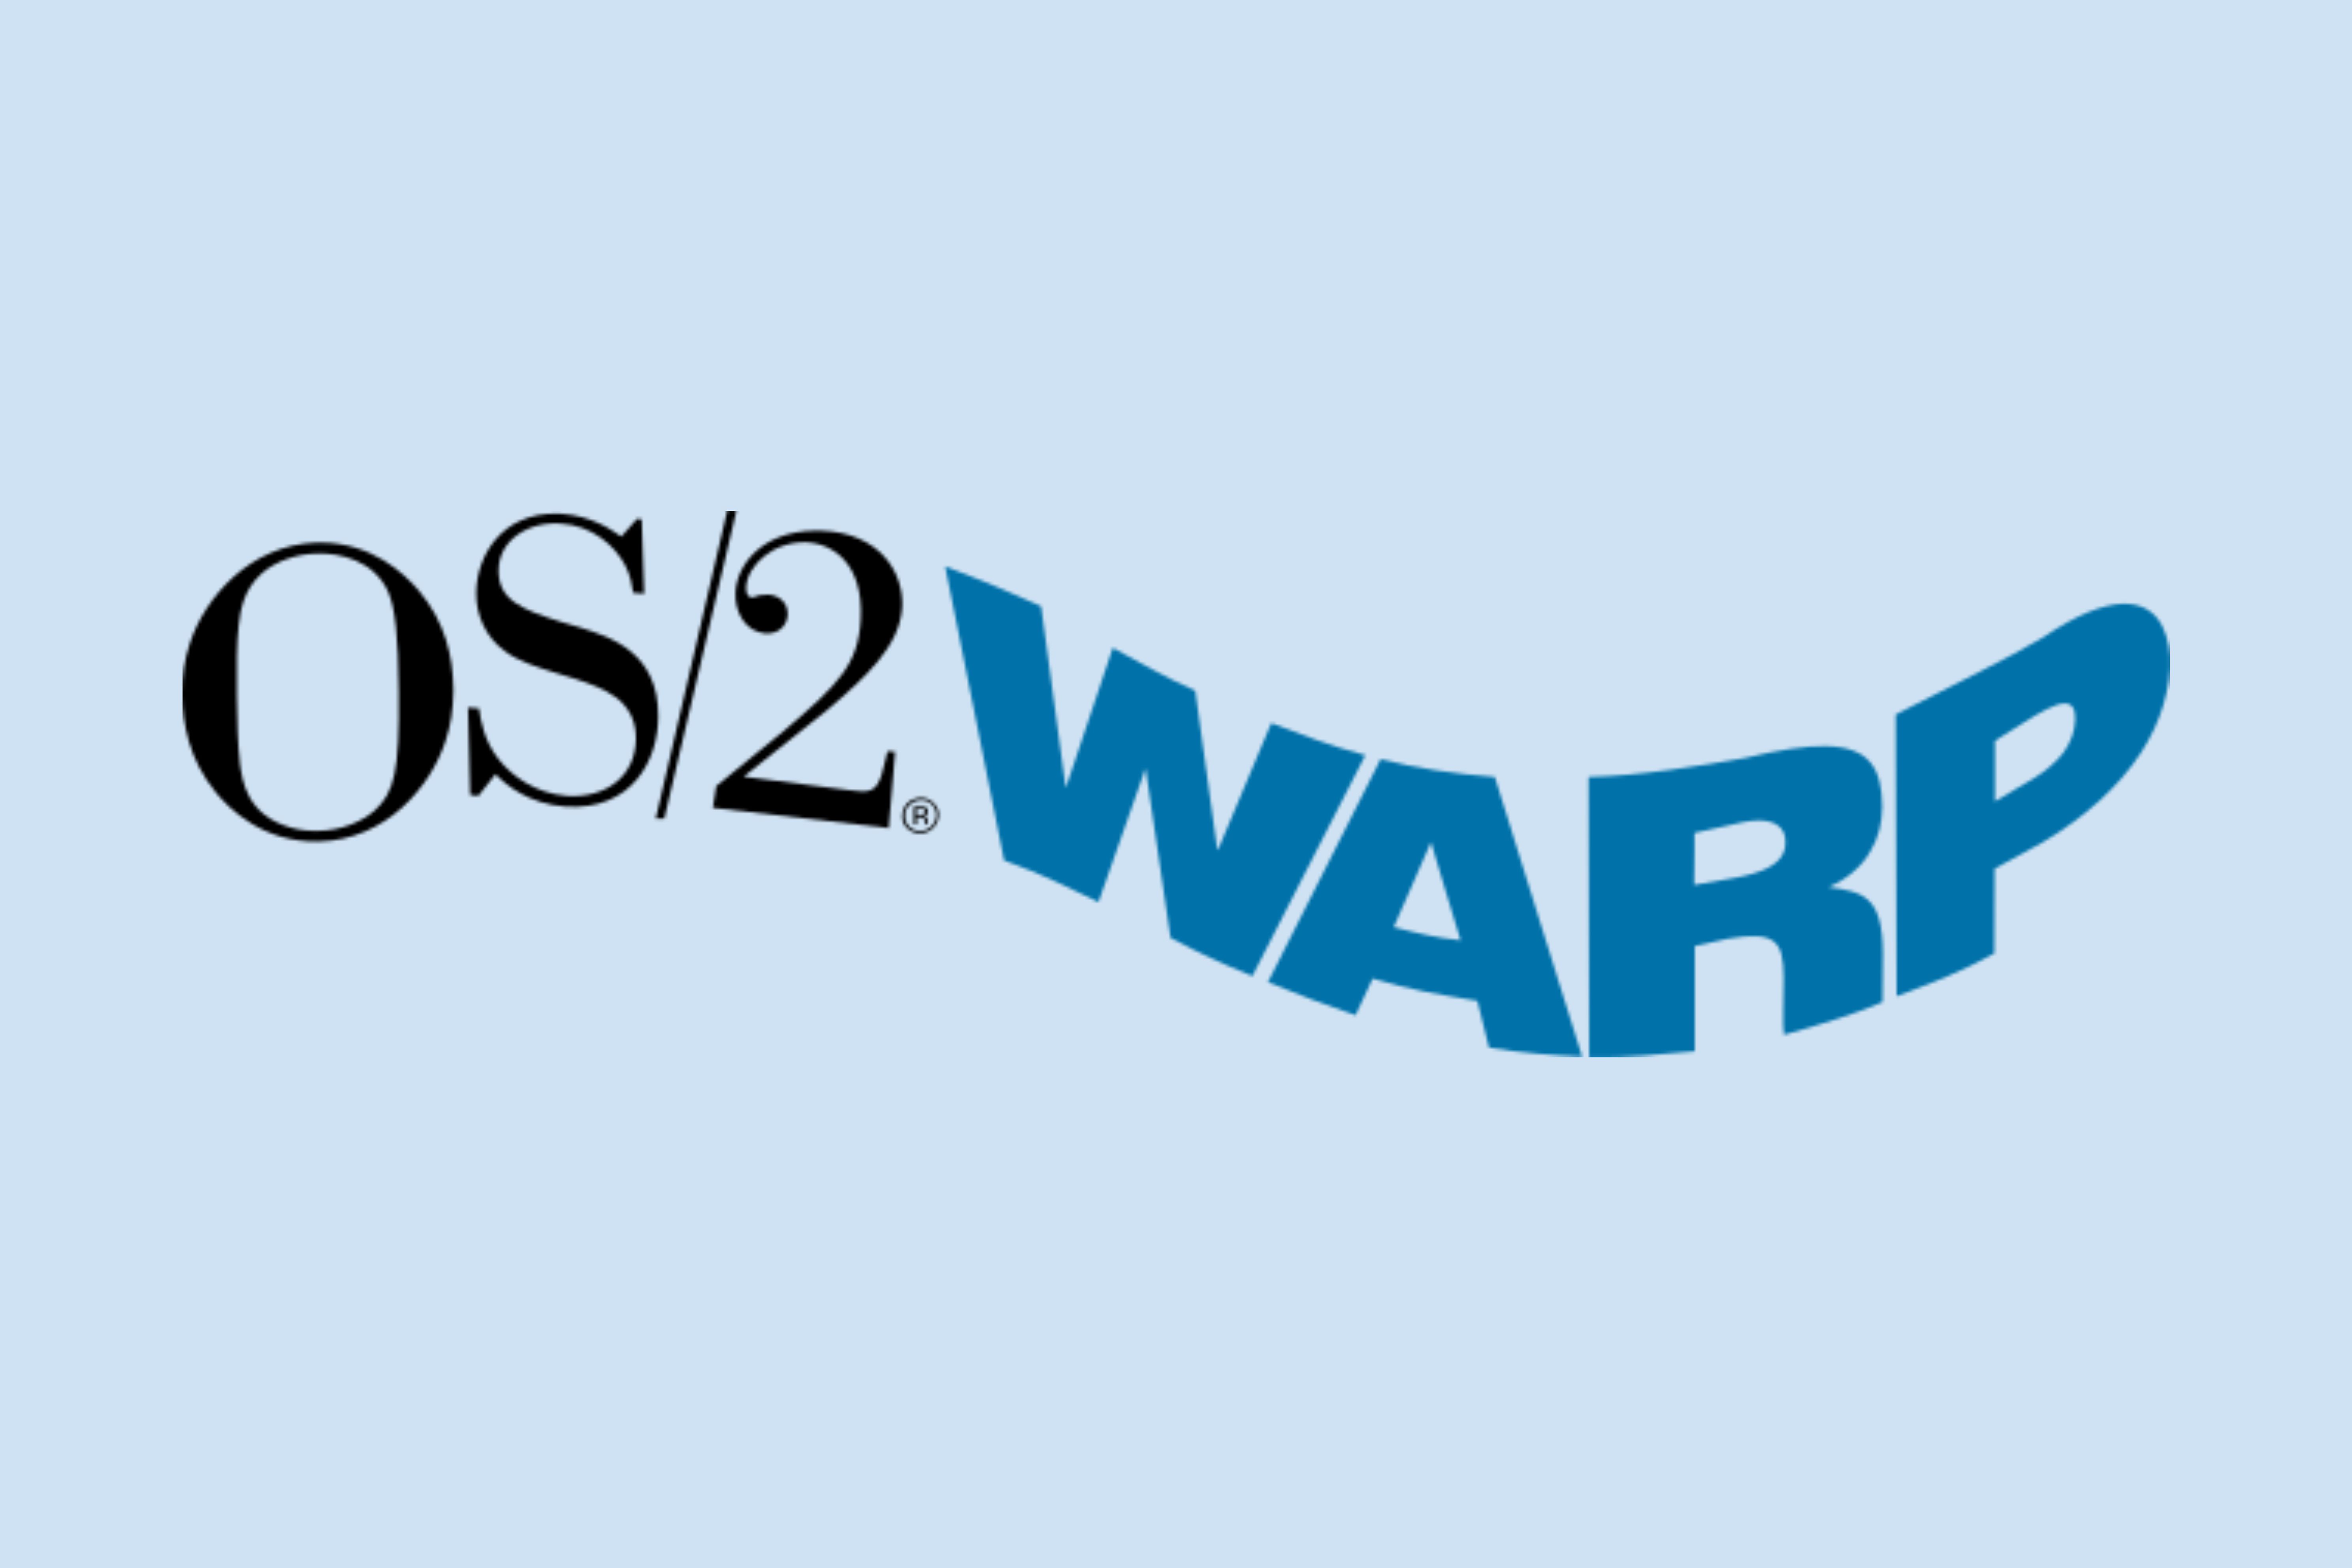 The OS/2 Warp logo on a light blue background.